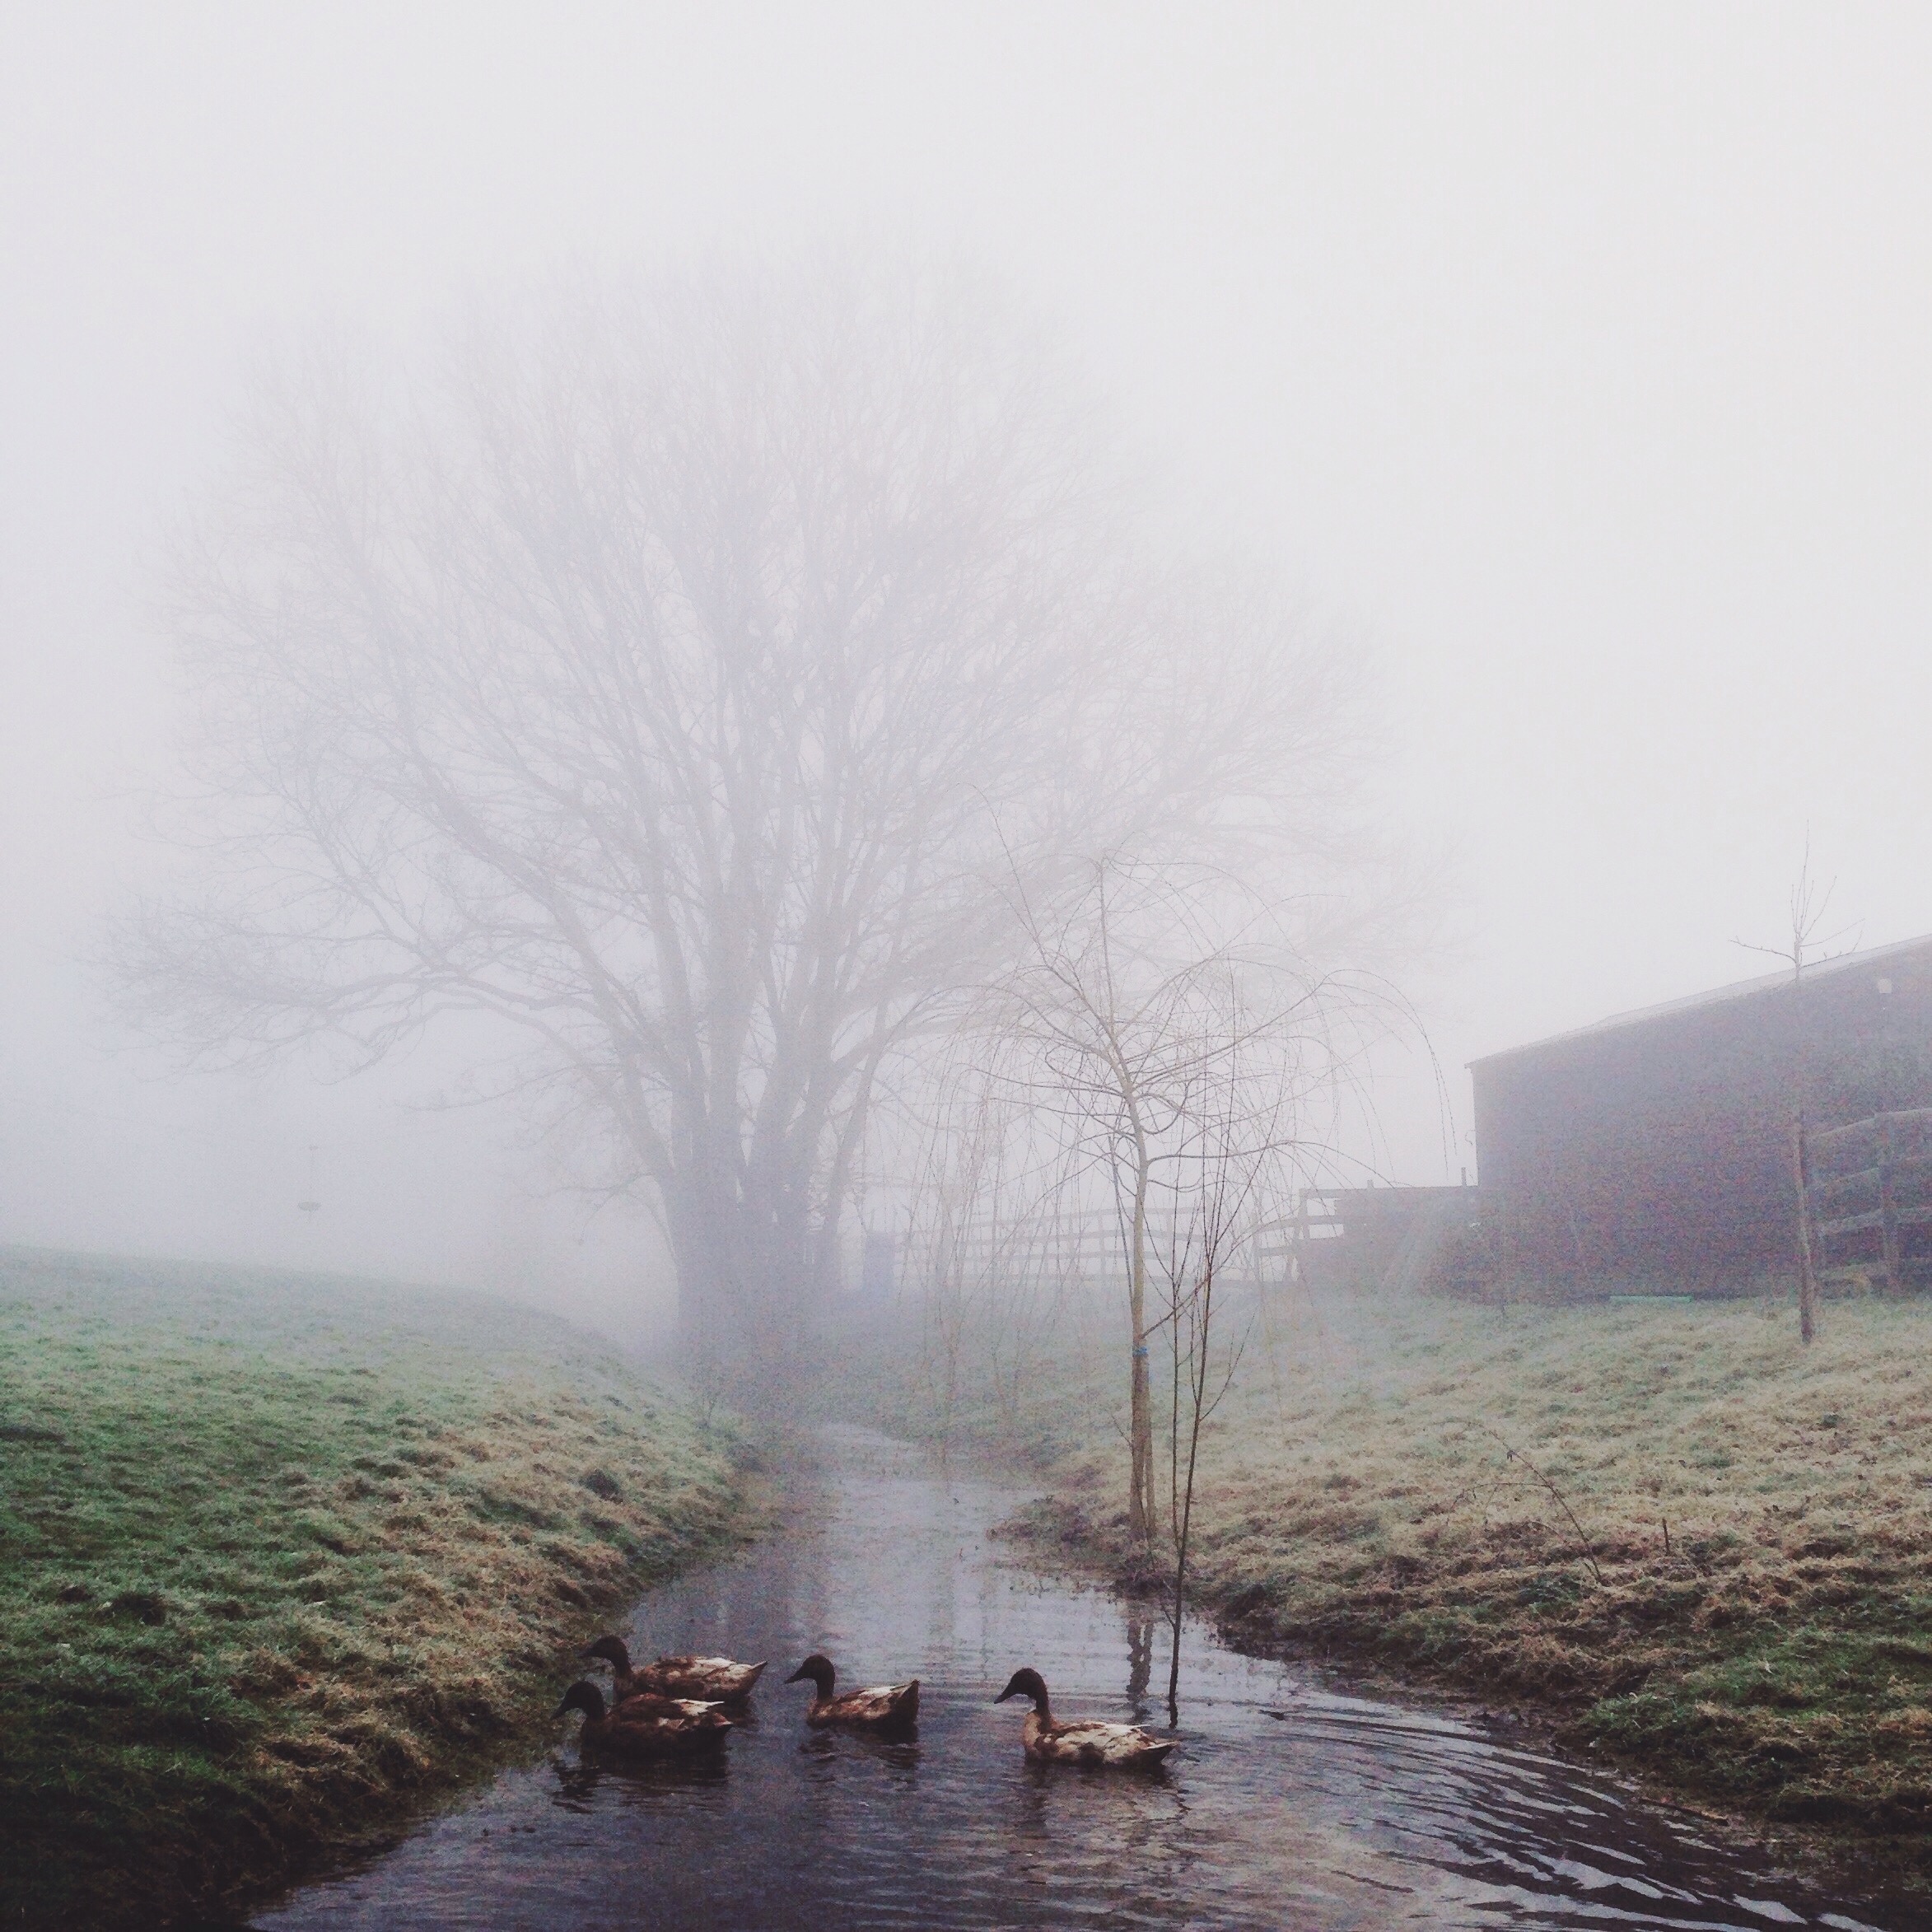 fog and ducks in a stream